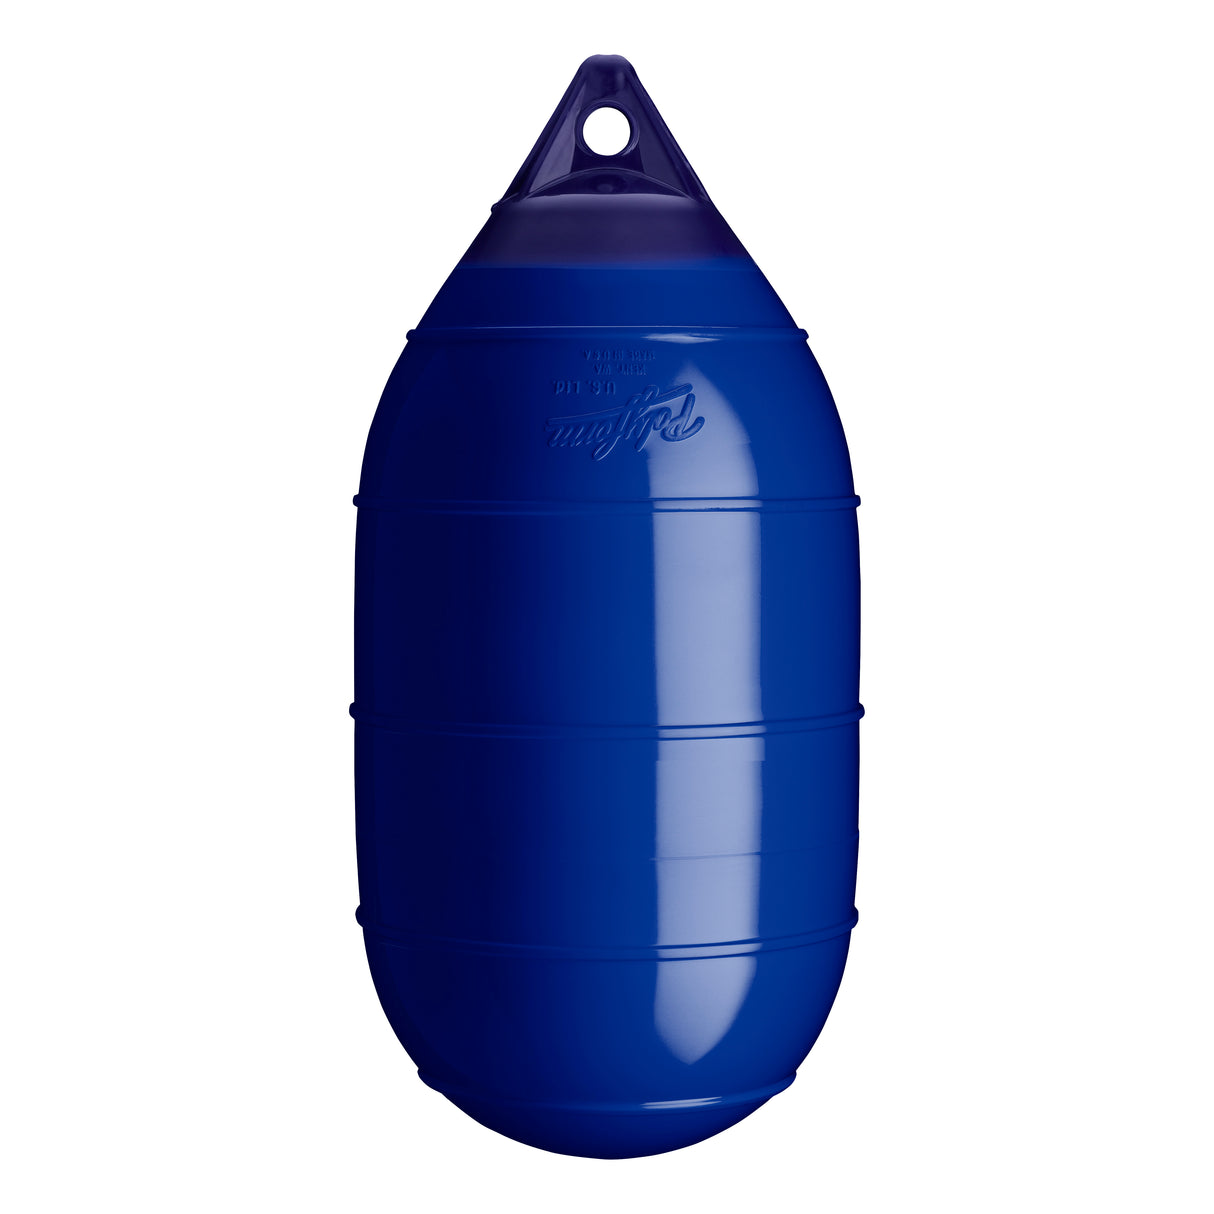 Cobalt Blue inflatable low drag buoy, Polyform LD-2 